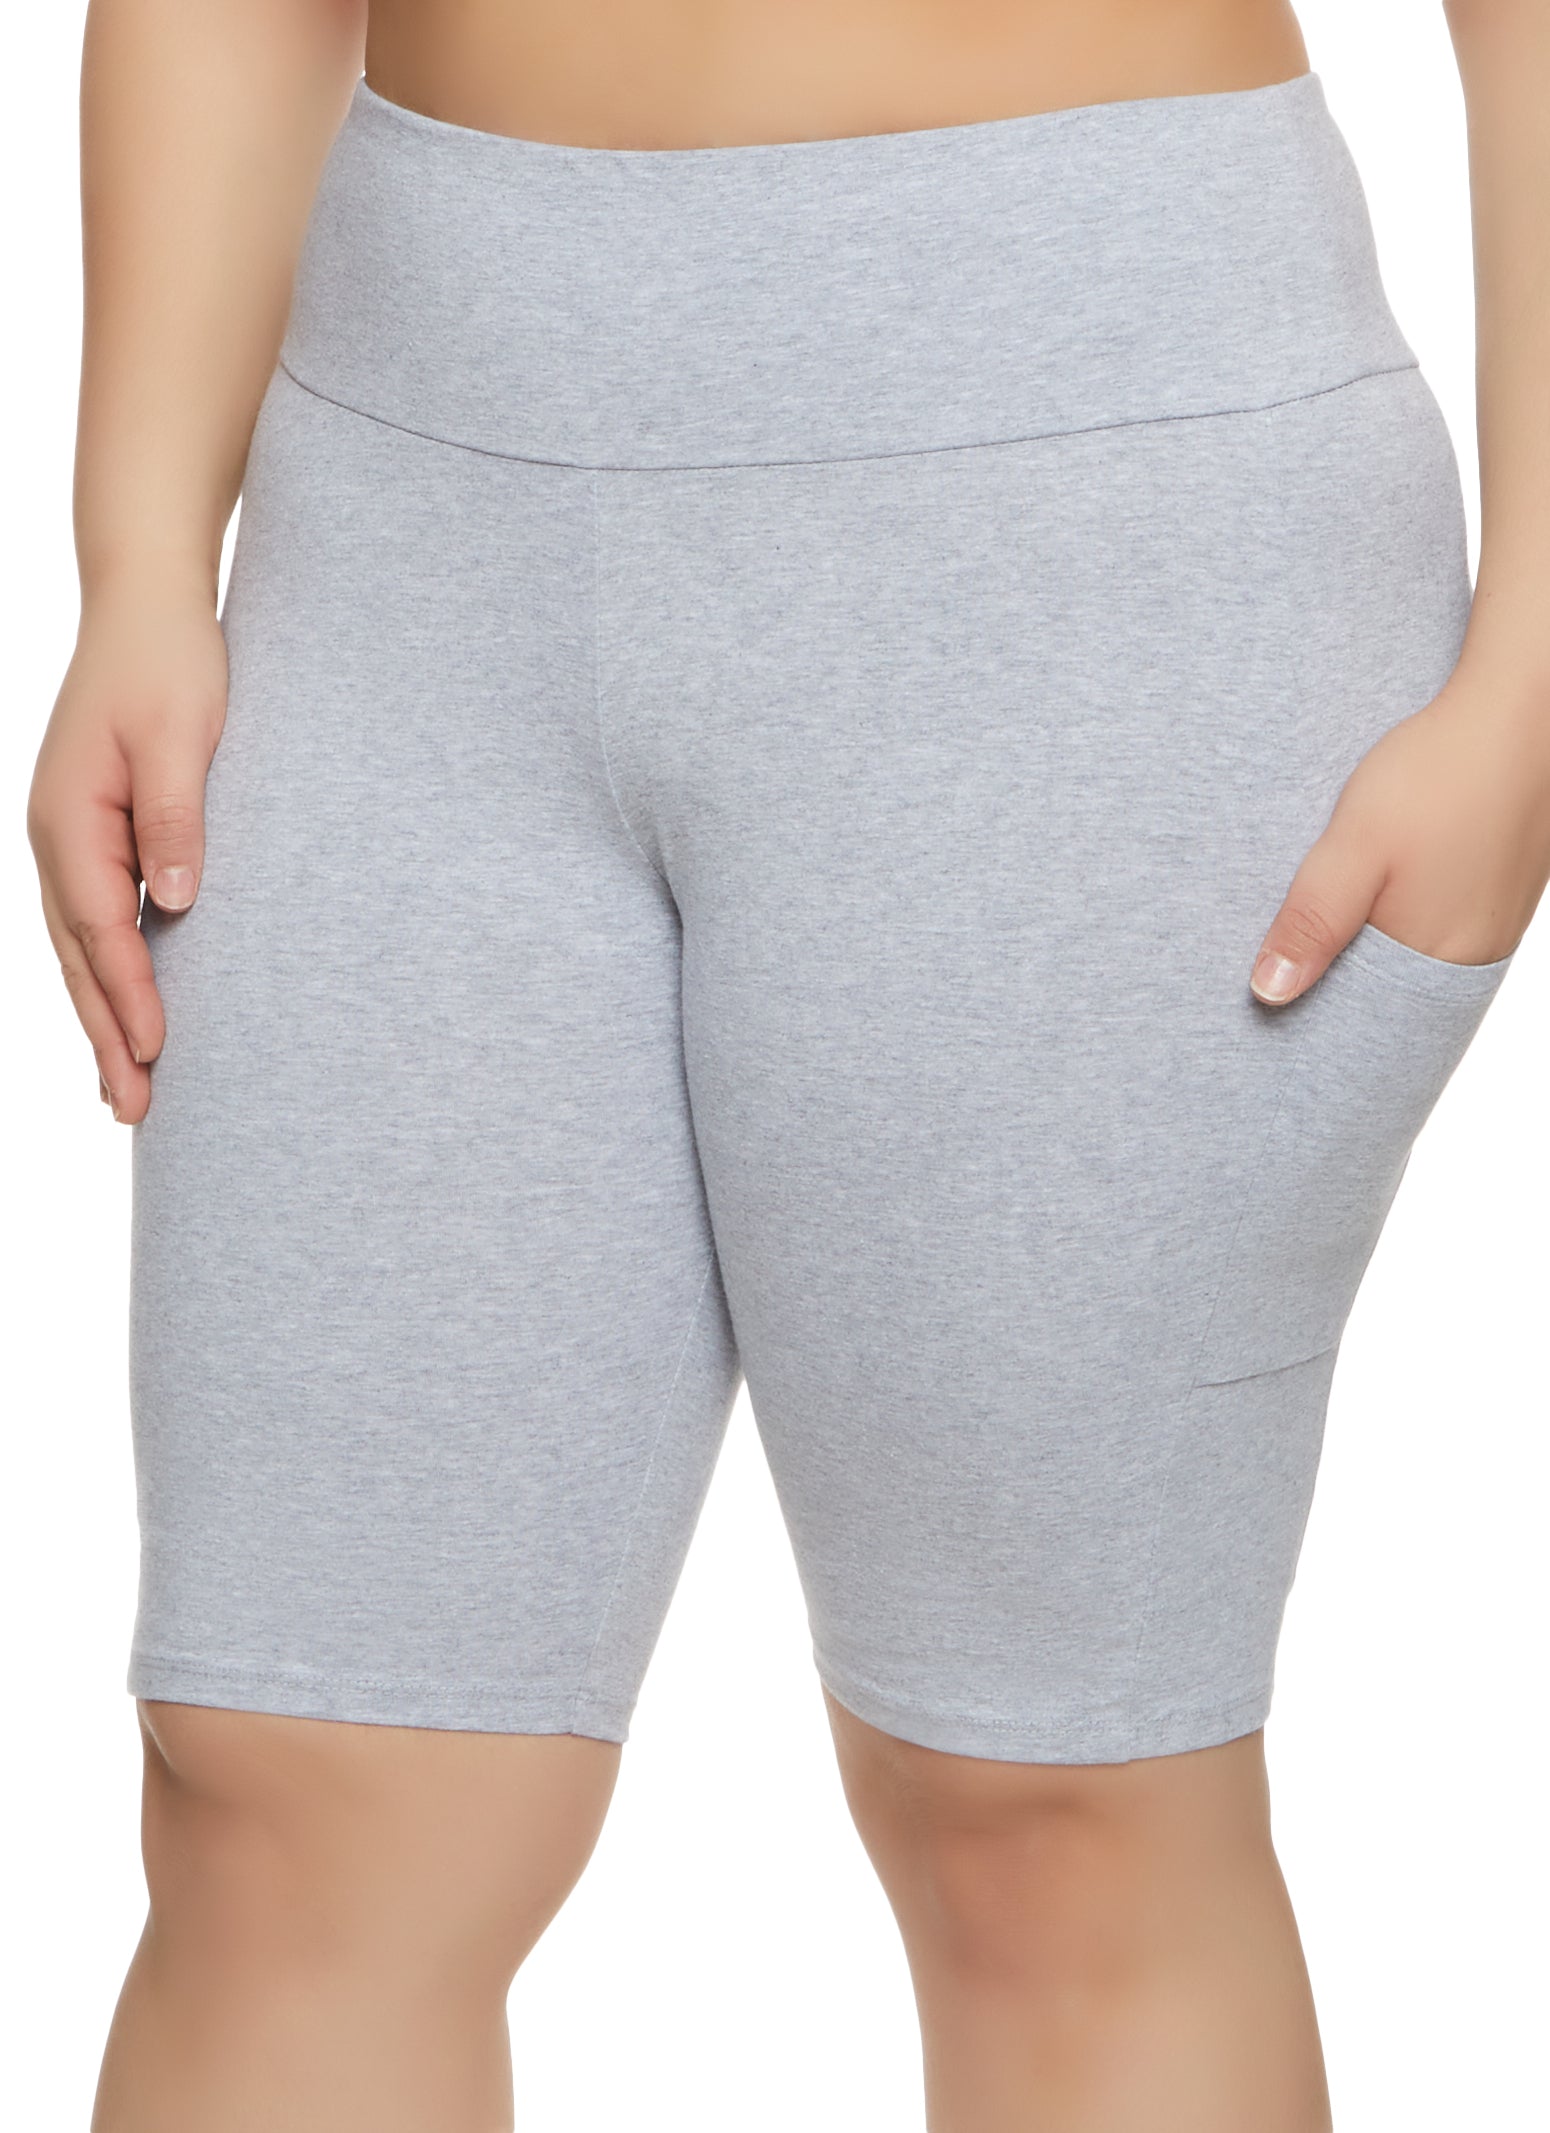 Plus Size Women Solid Elastic Waist Shorts Drawstring Short Pants